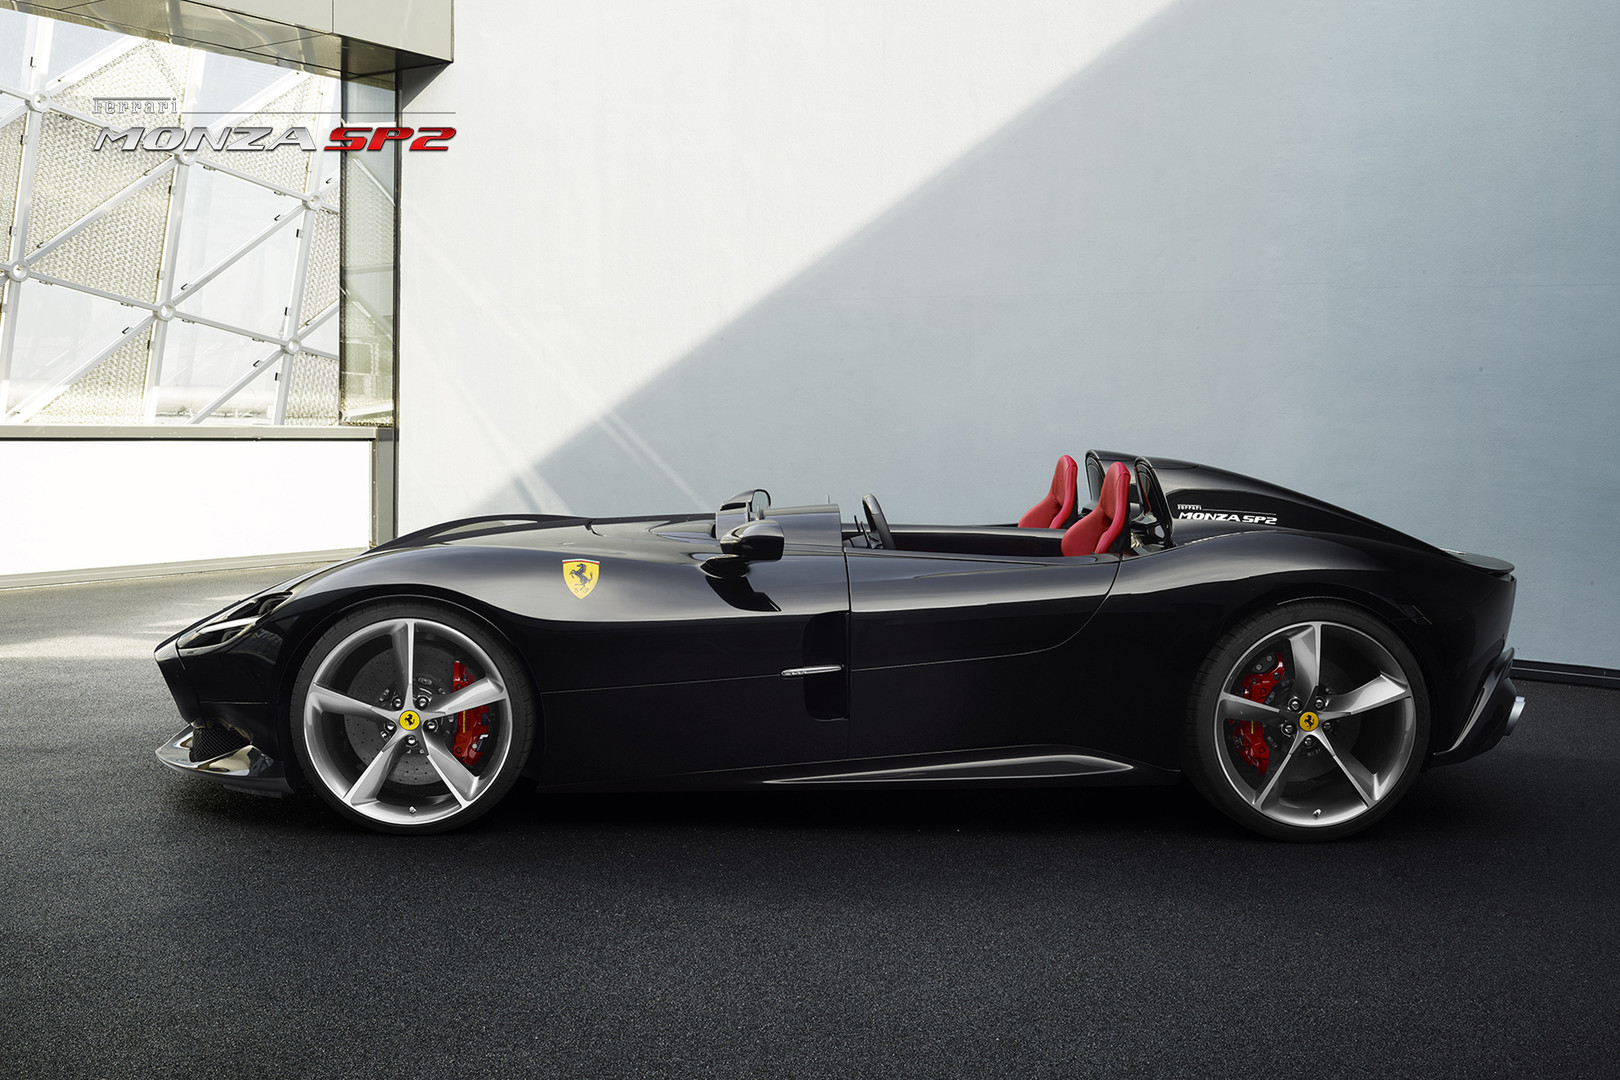 Ferrari Monza Sp2 technical specifications, specs